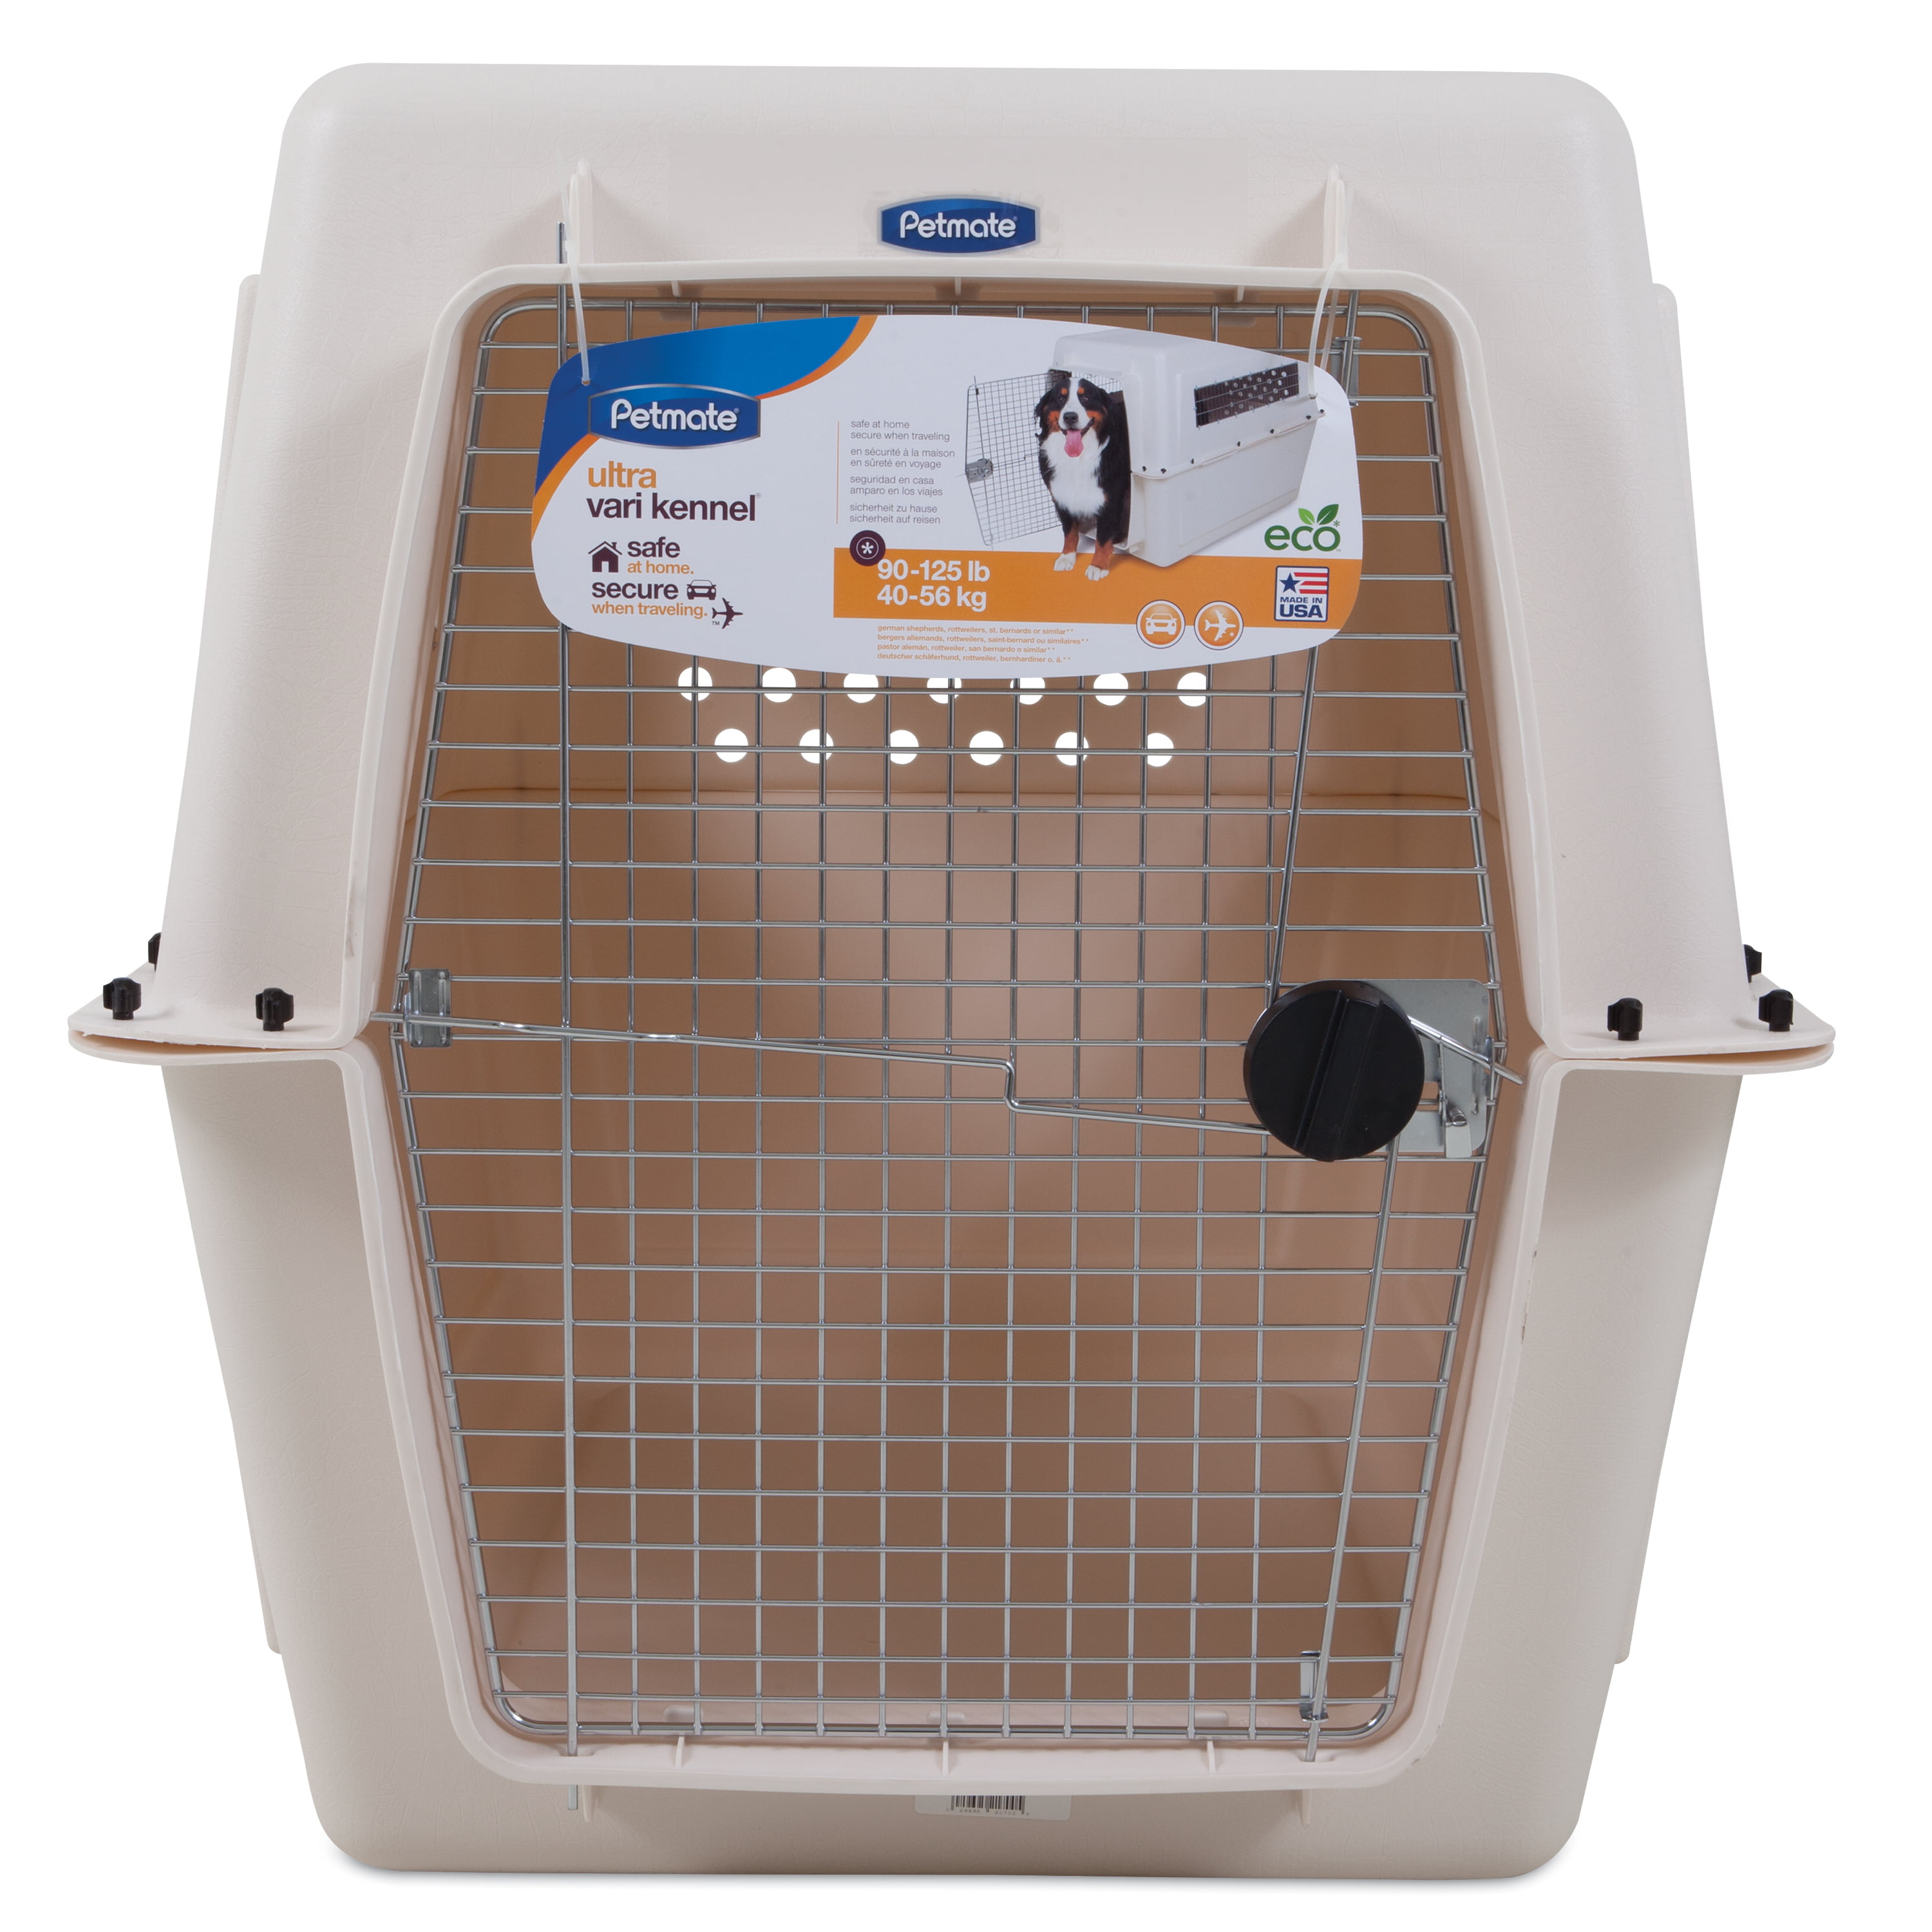 Petmate Vari Kennel Plastic Dog Crate, Bleached Linen, X-Large, 48